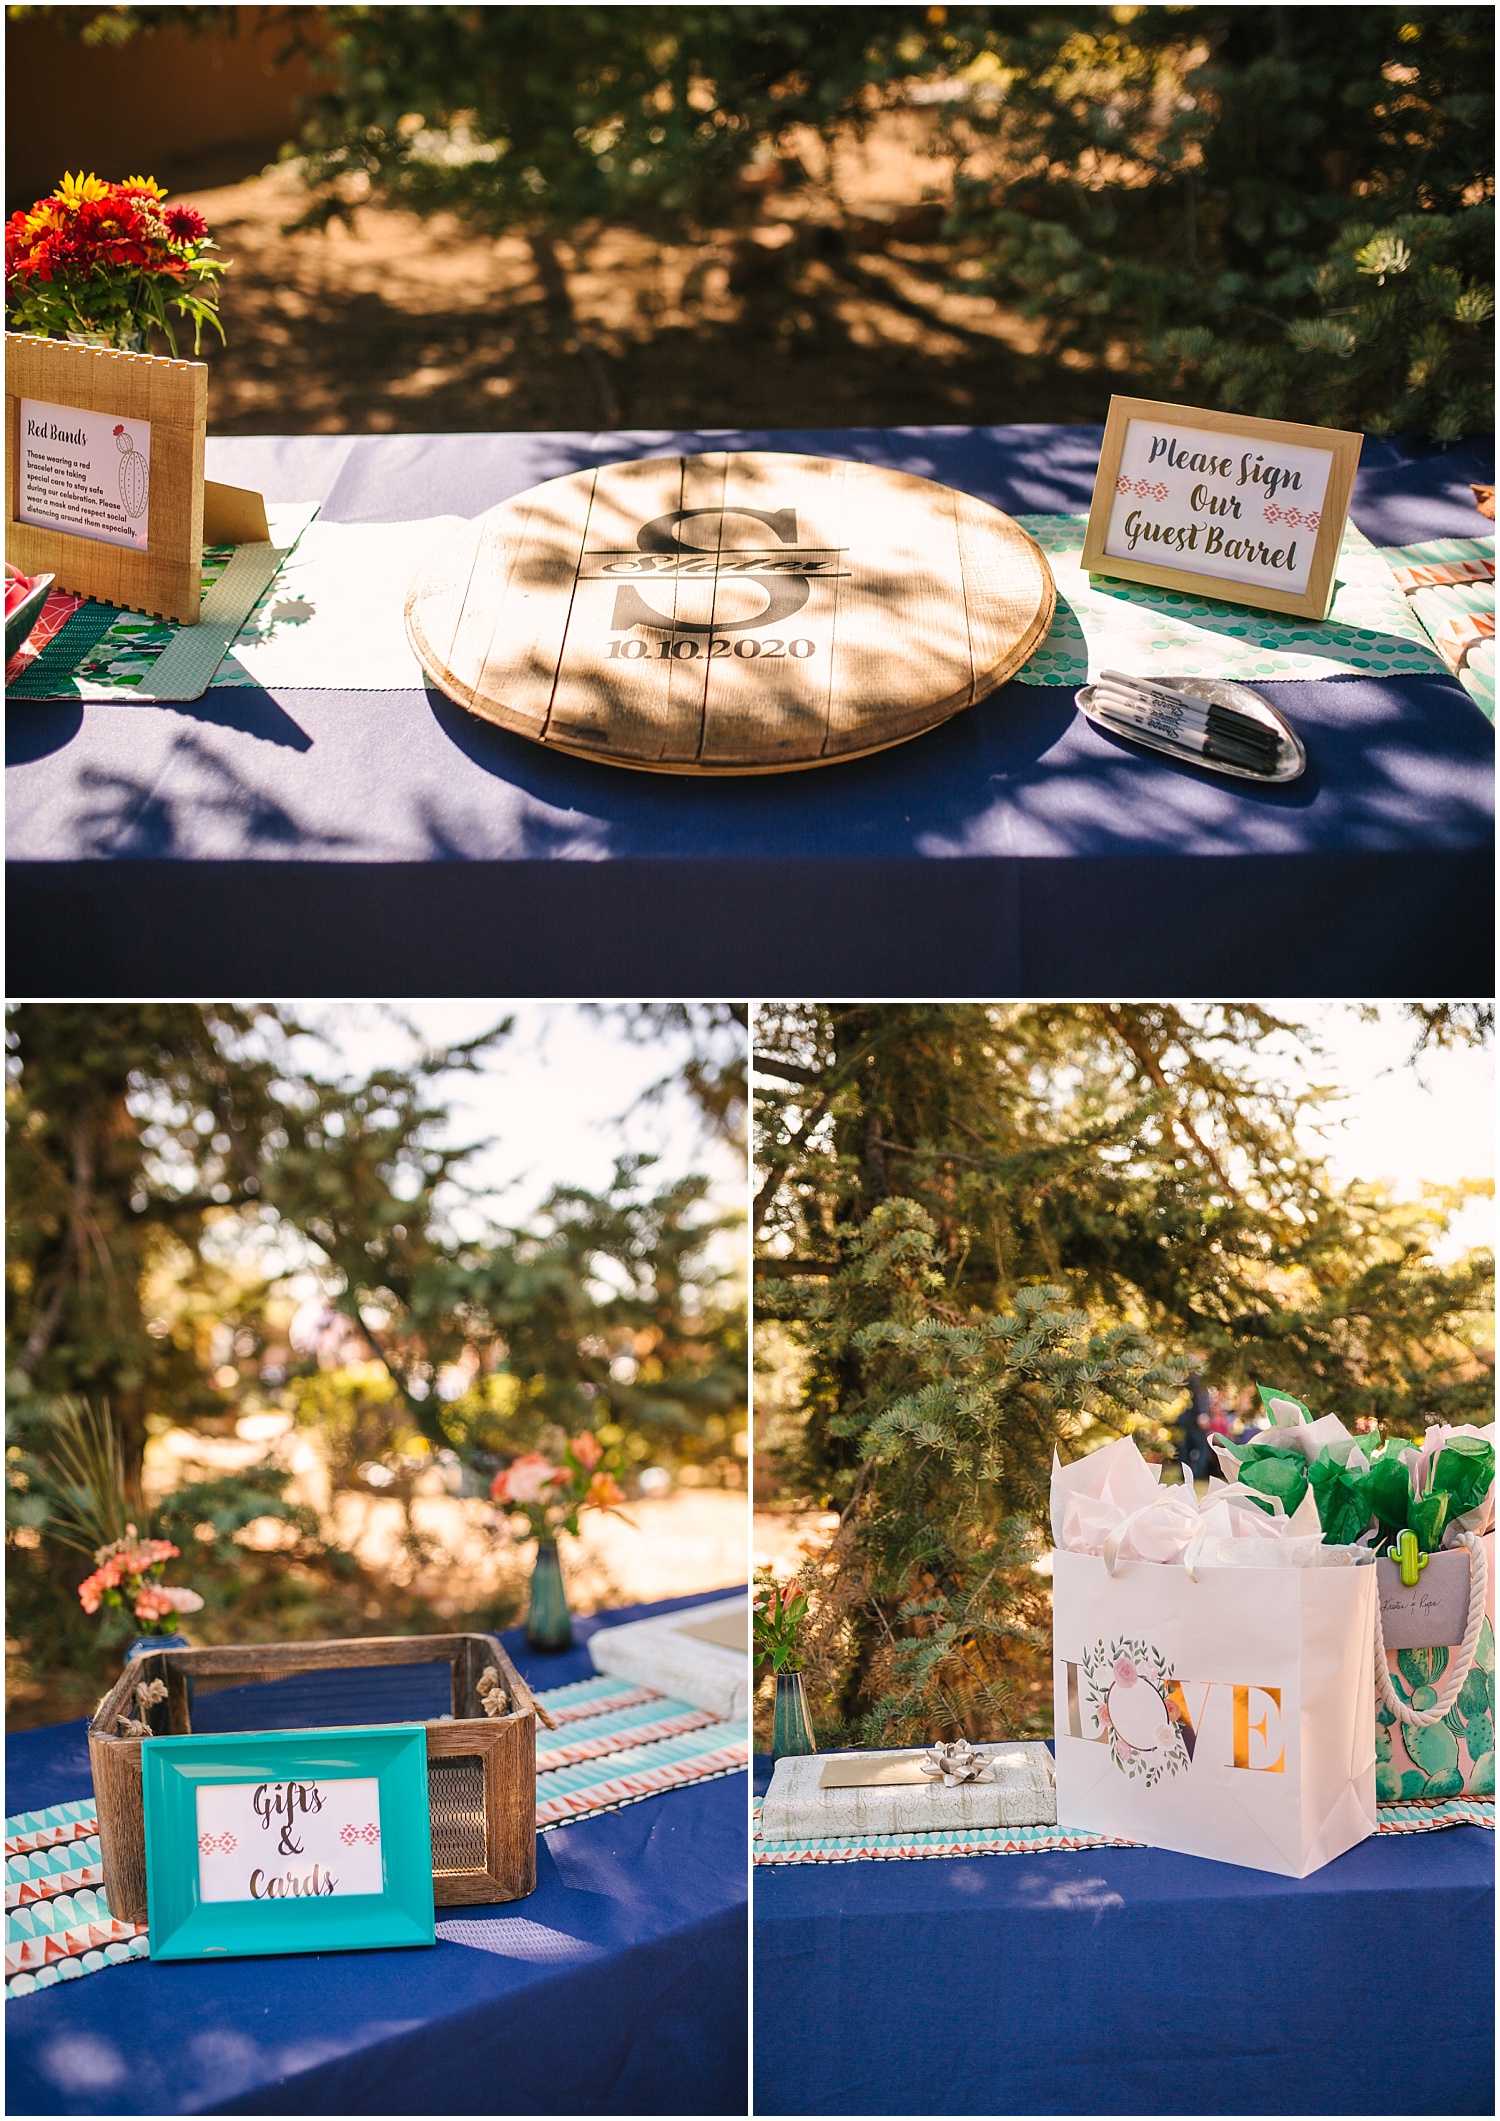 DIY signs and details for crafty backyard wedding in Santa Fe